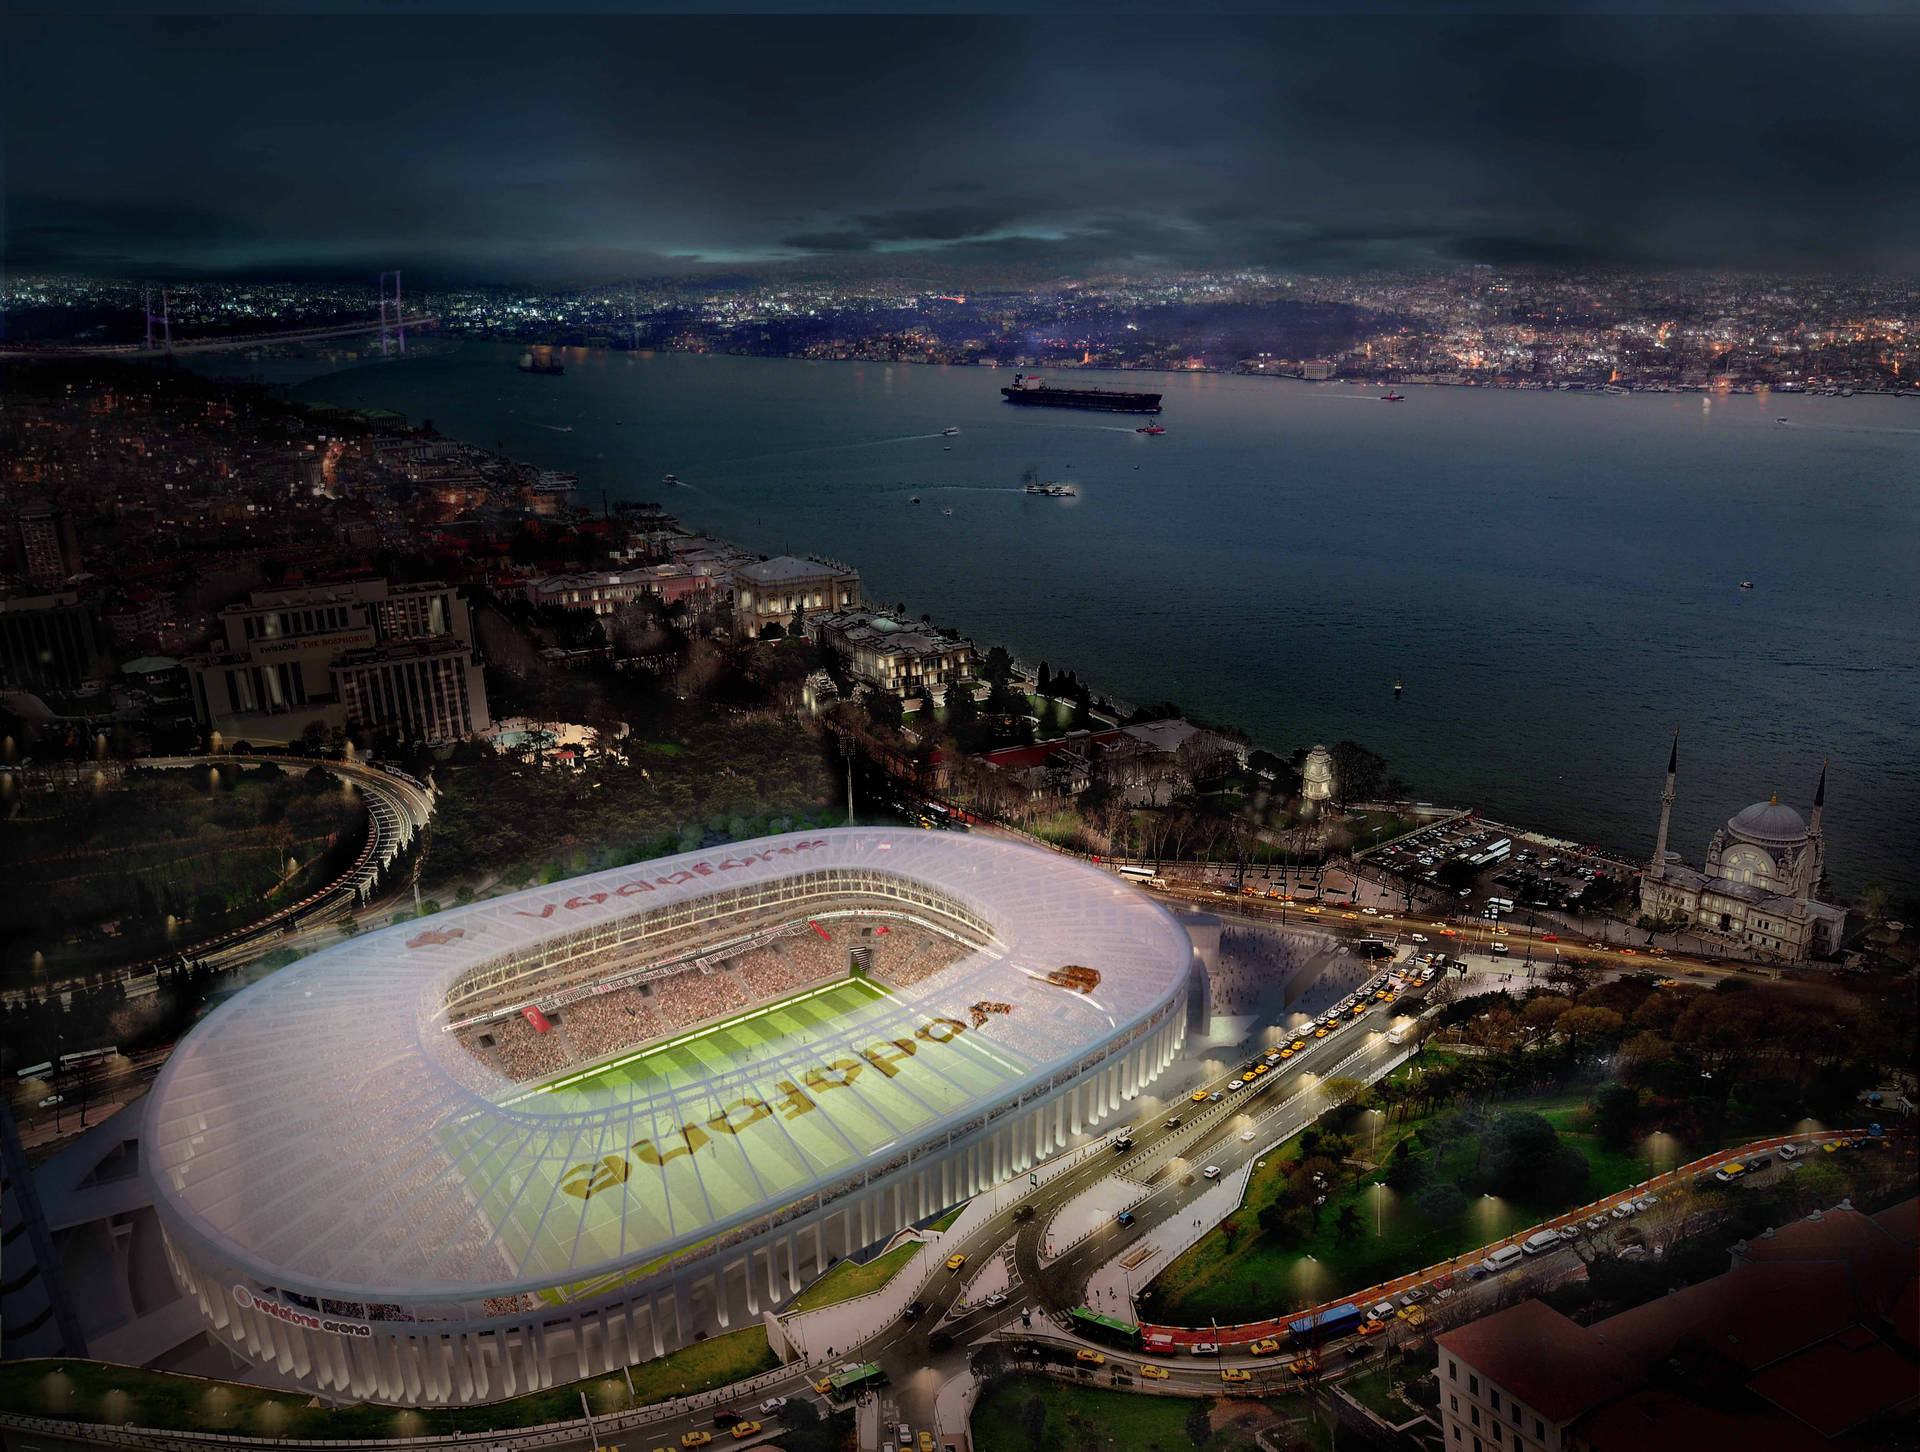 Vodafone Park Football Stadium